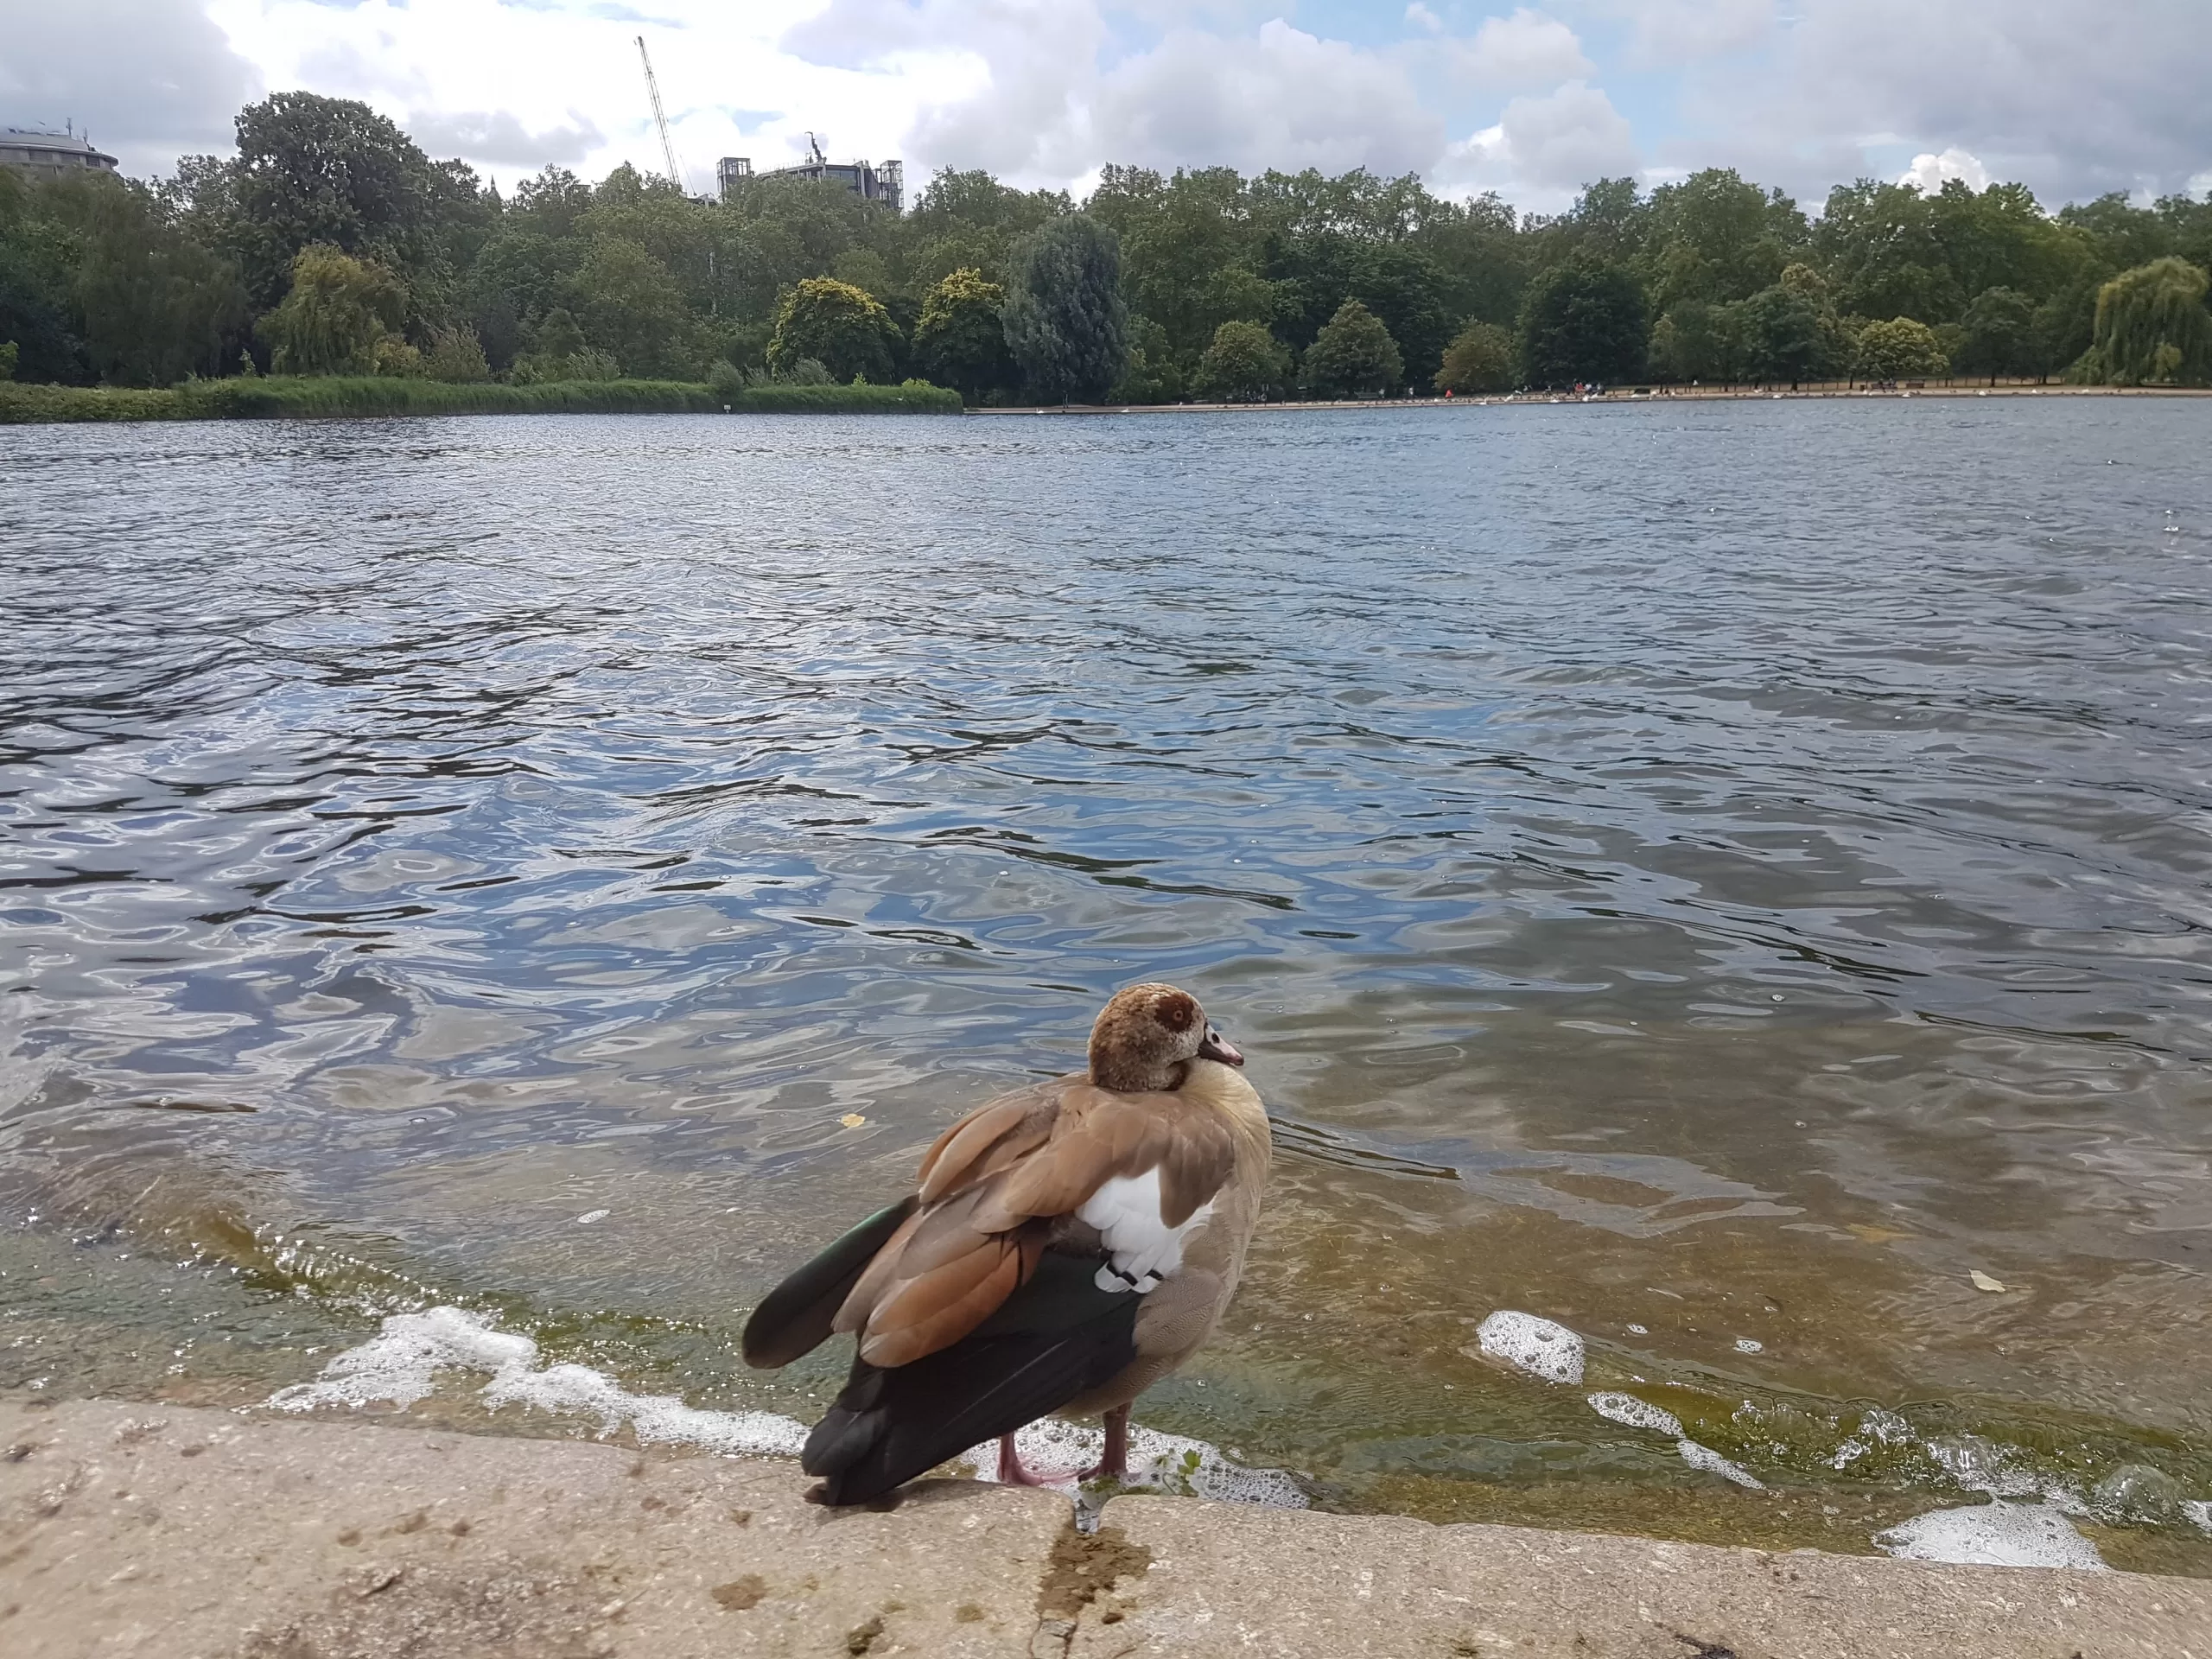 A duck in Hyde Park, London